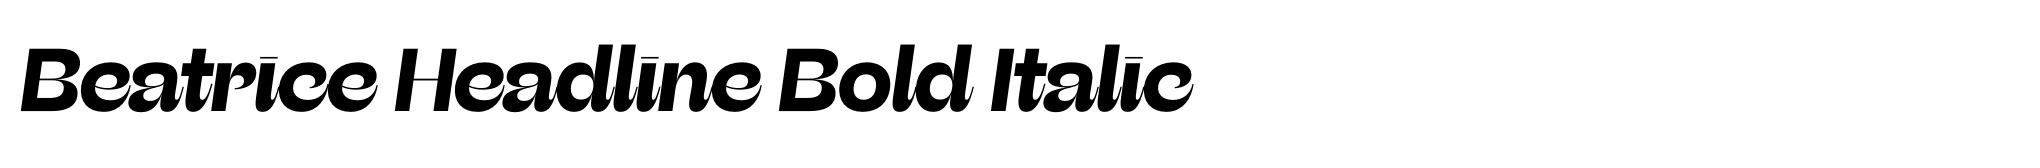 Beatrice Headline Bold Italic image